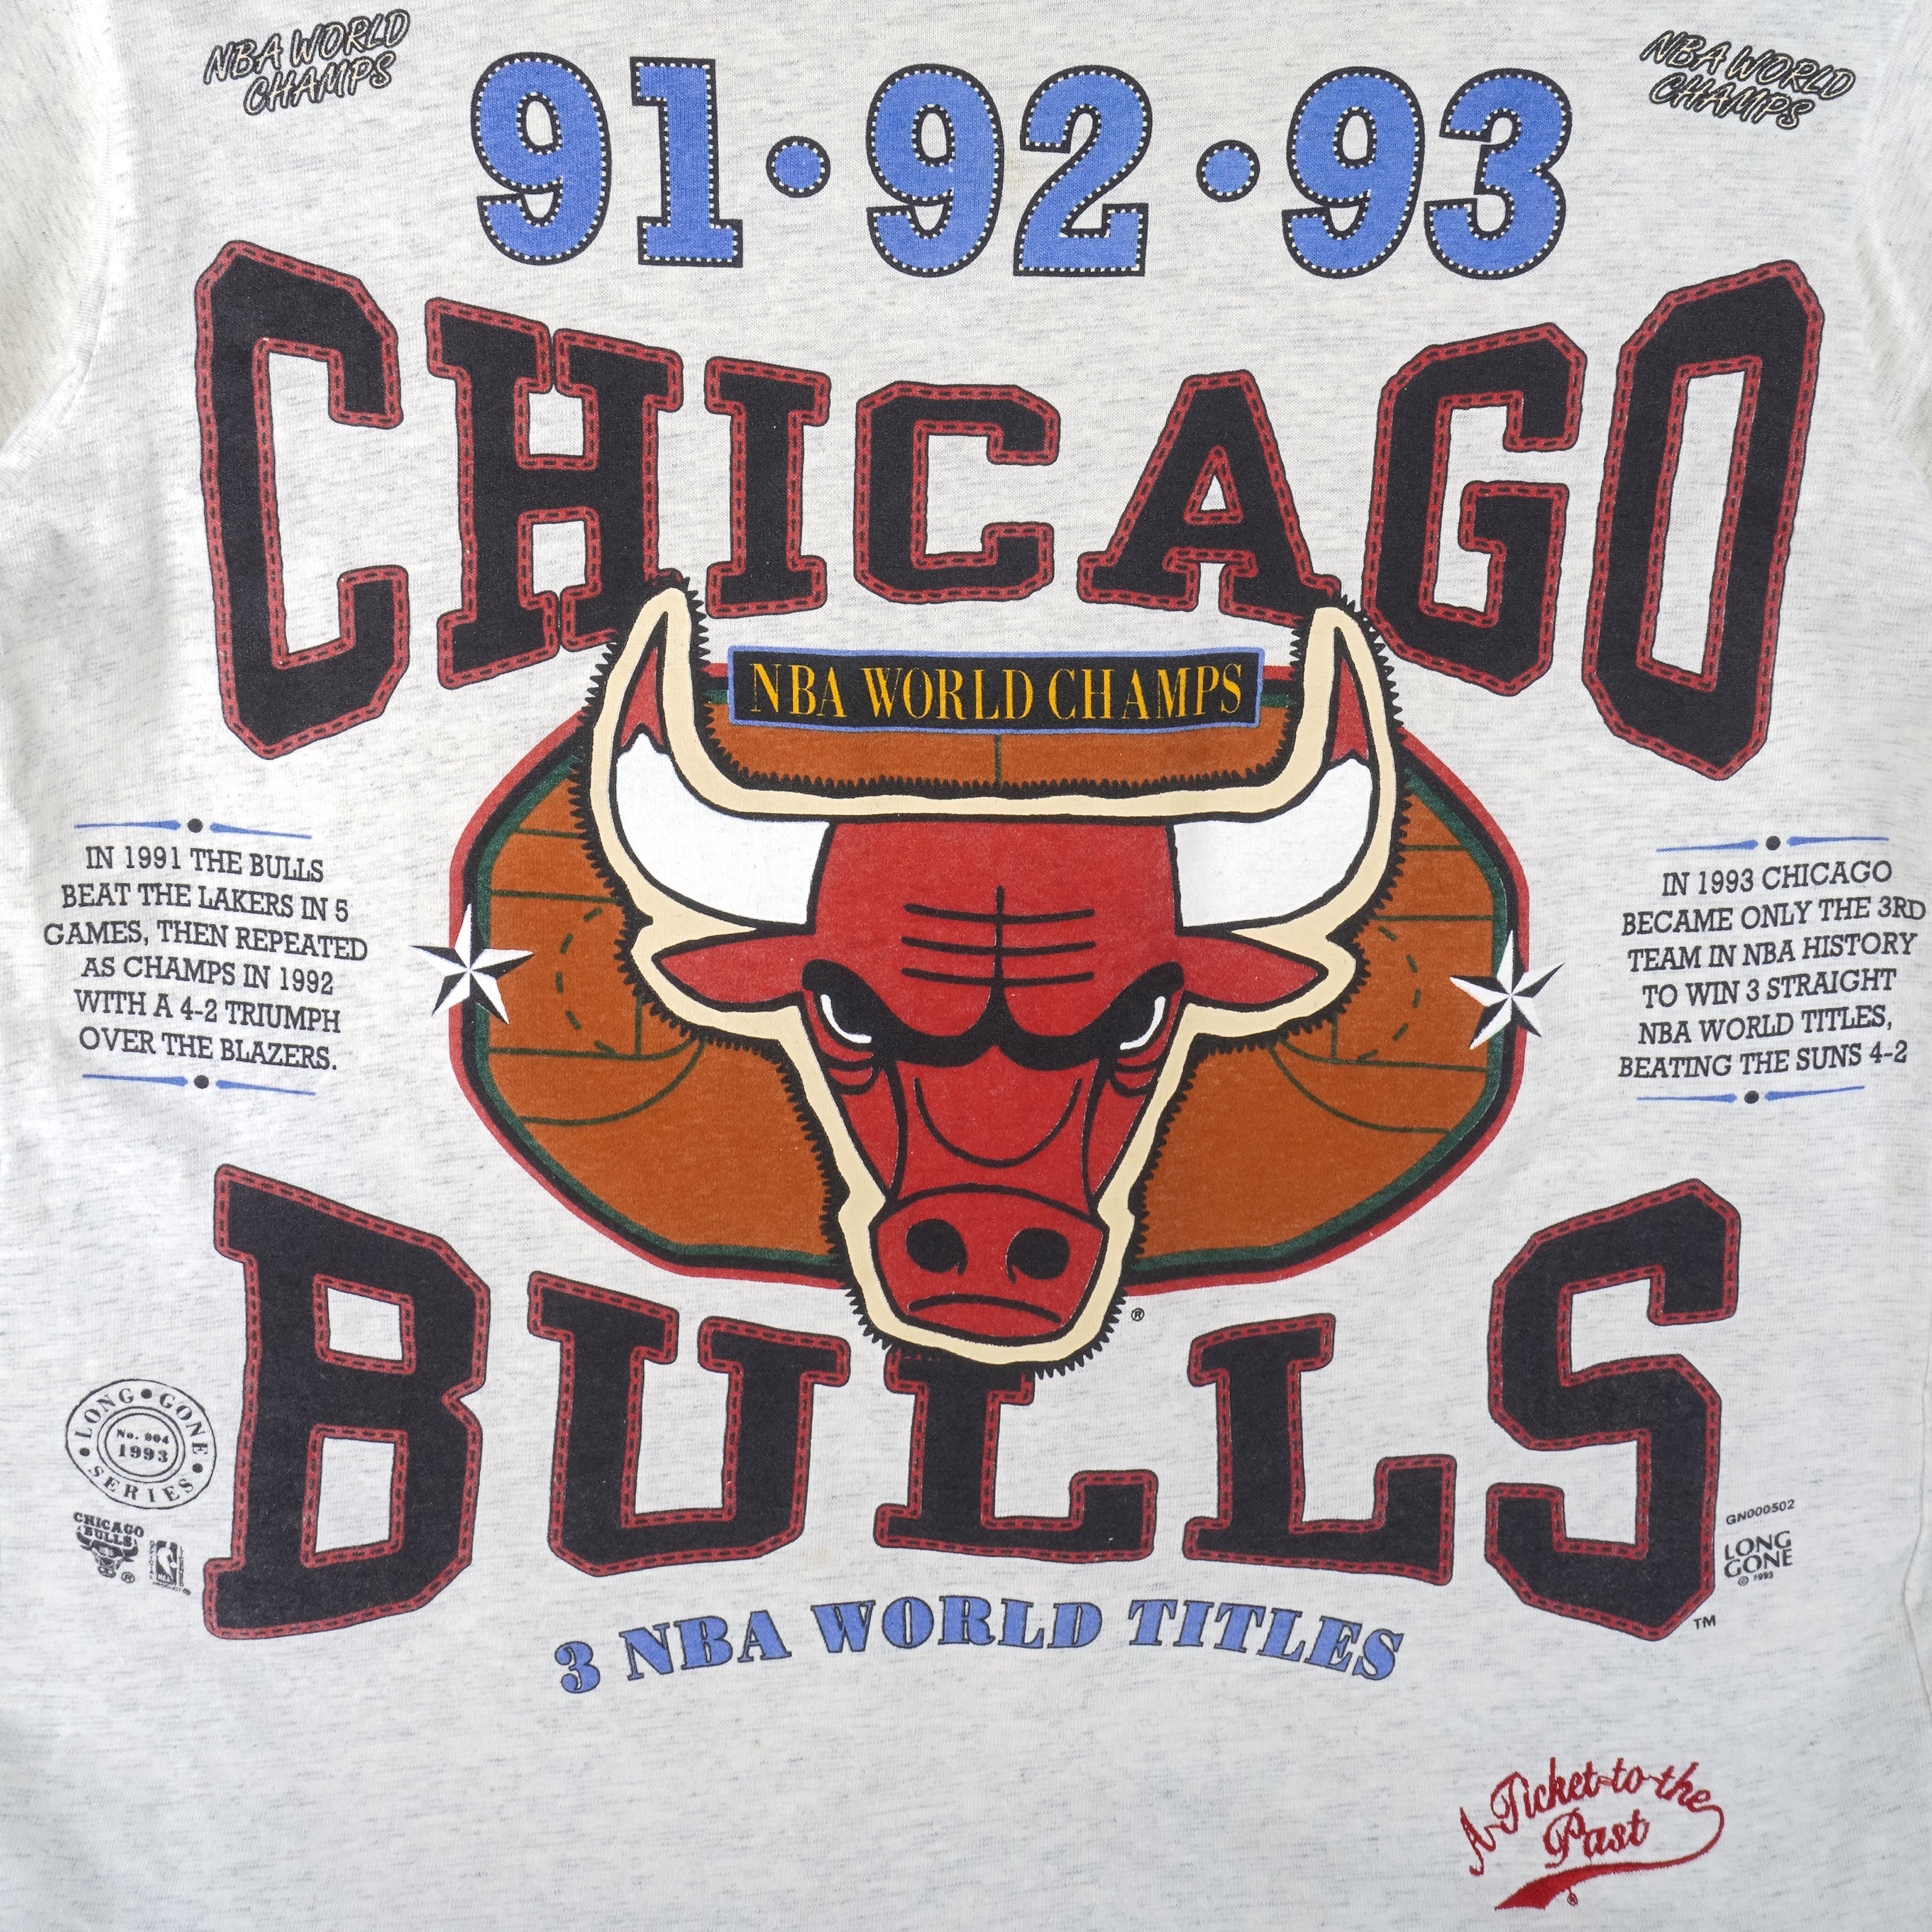 Vintage Chicago Bulls T-shirt Jordan Repeat 3 Peat 1998 Starter M